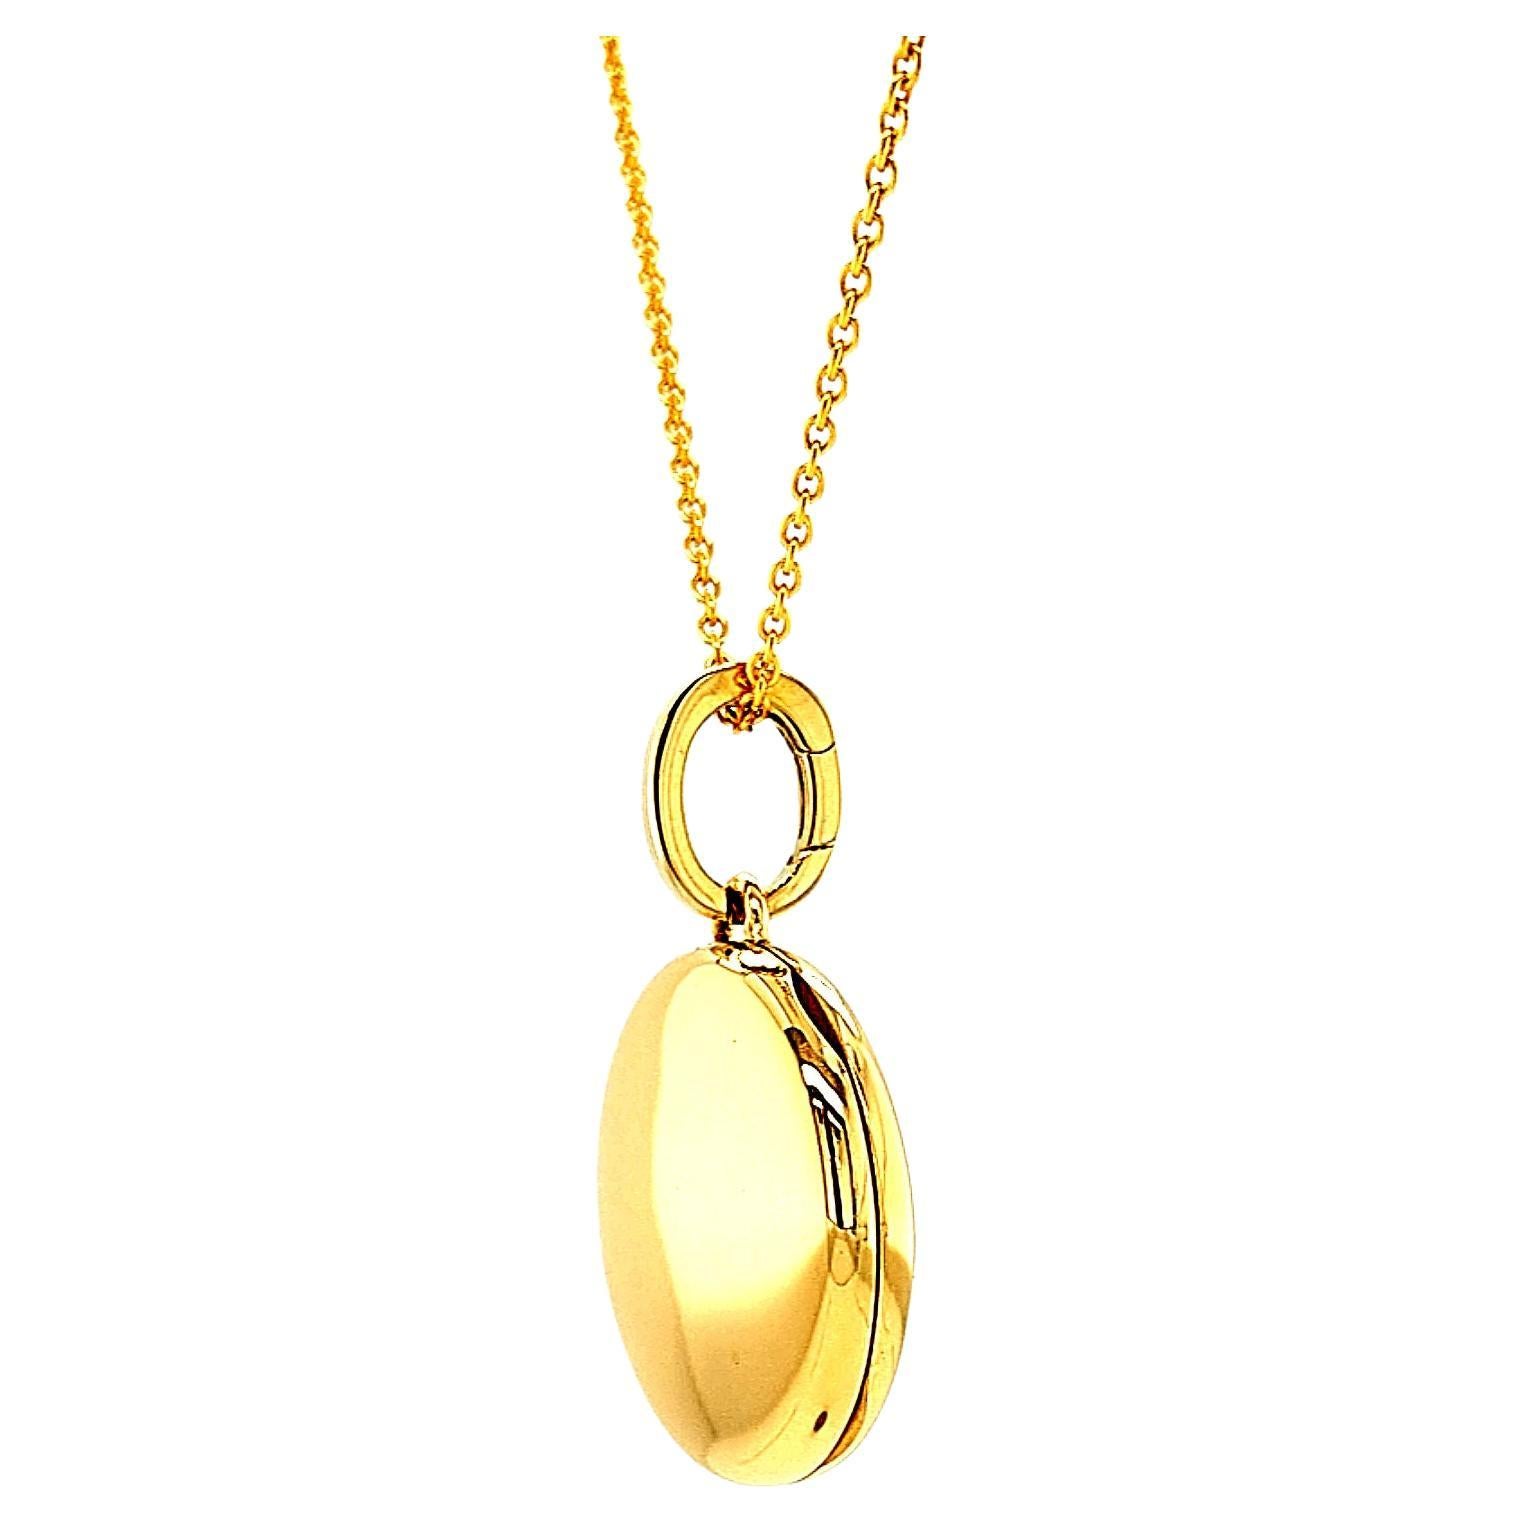 Mdaillon pendentif rond personnalisable en or jaune 18 carats, diamtre 26,0 mm